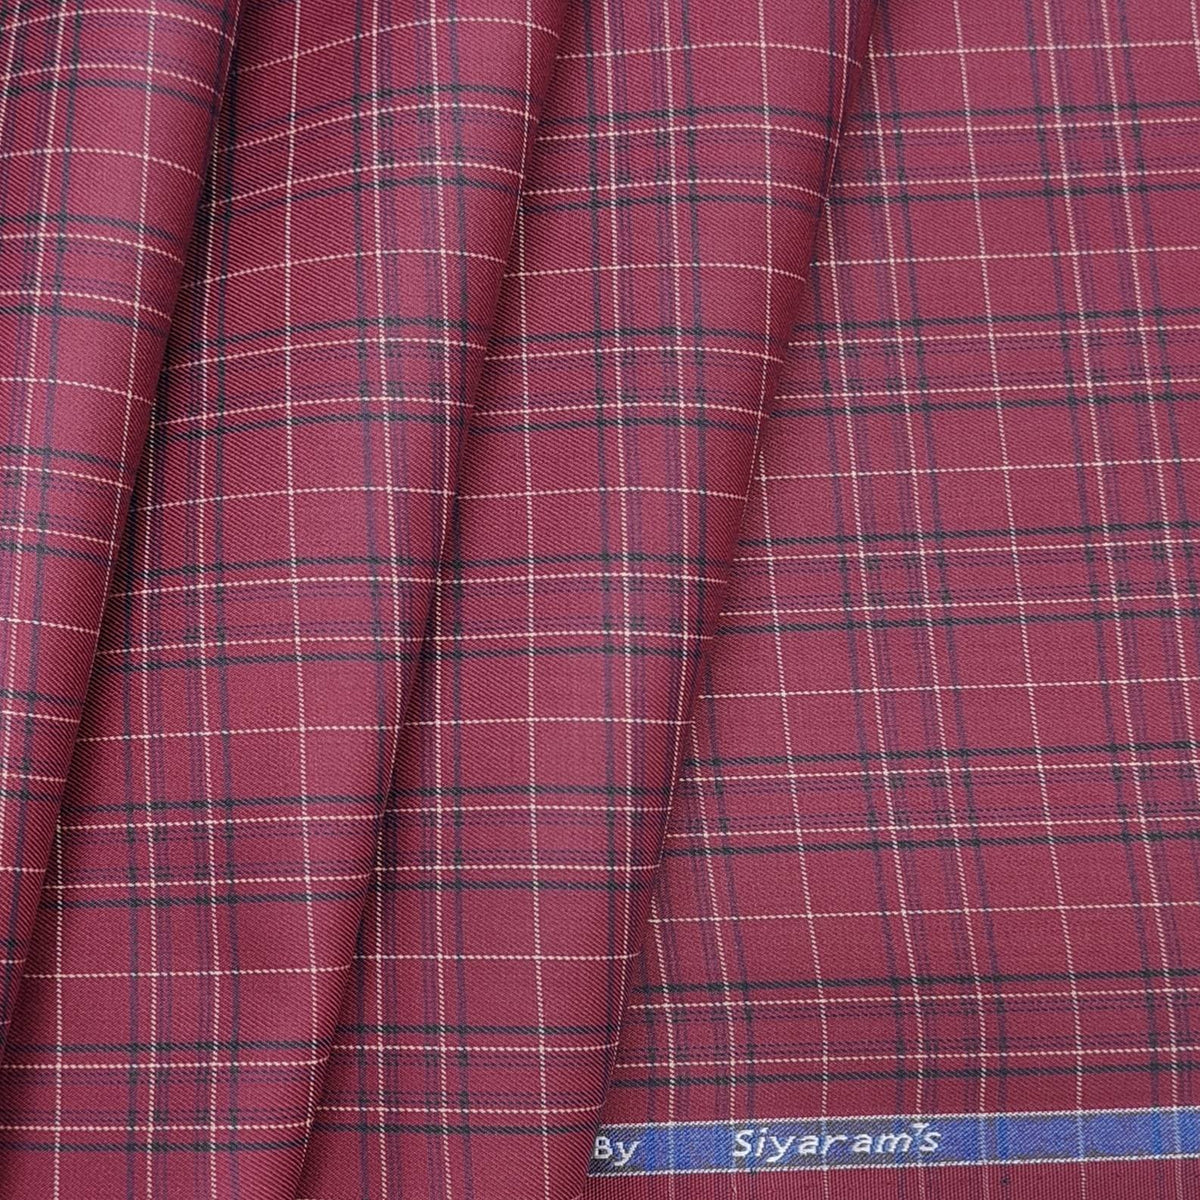 Siyaram Men's Polycotton Premium Soft Check Shirt Fabric Colour Dark meroon